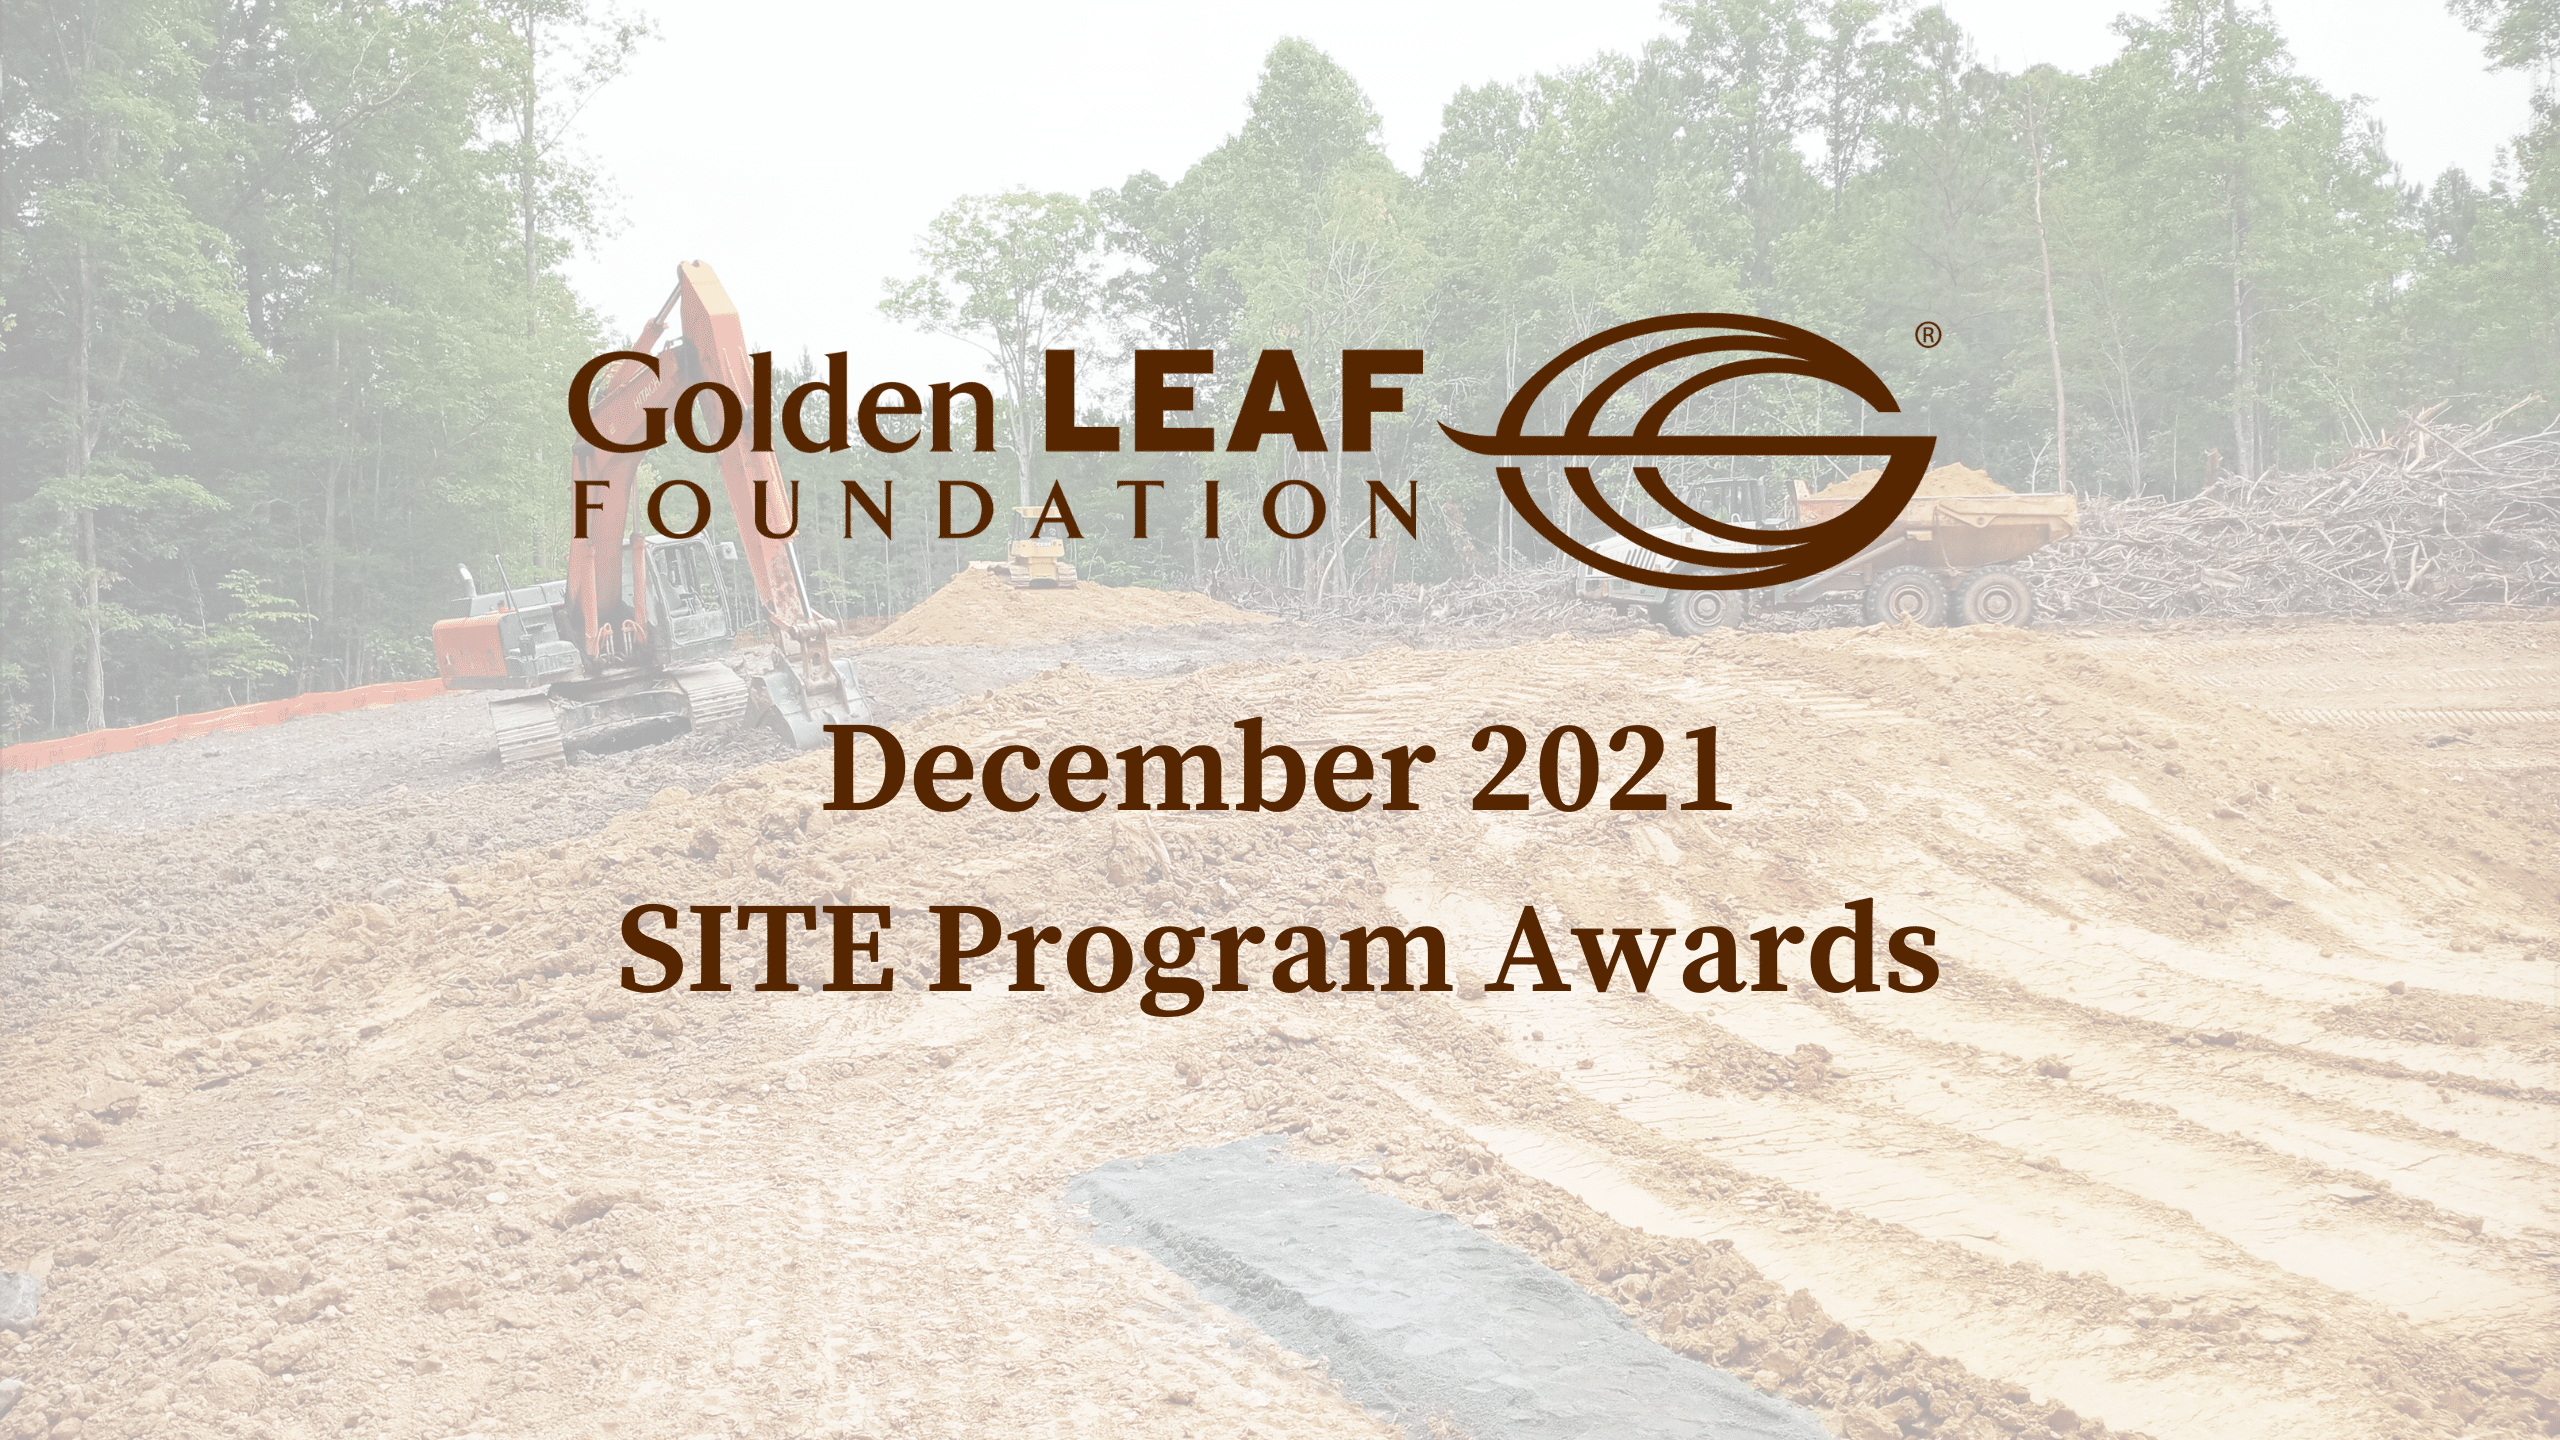 Golden LEAF Board of Directors awards $5 million for first round of SITE Program at December 2021 meeting